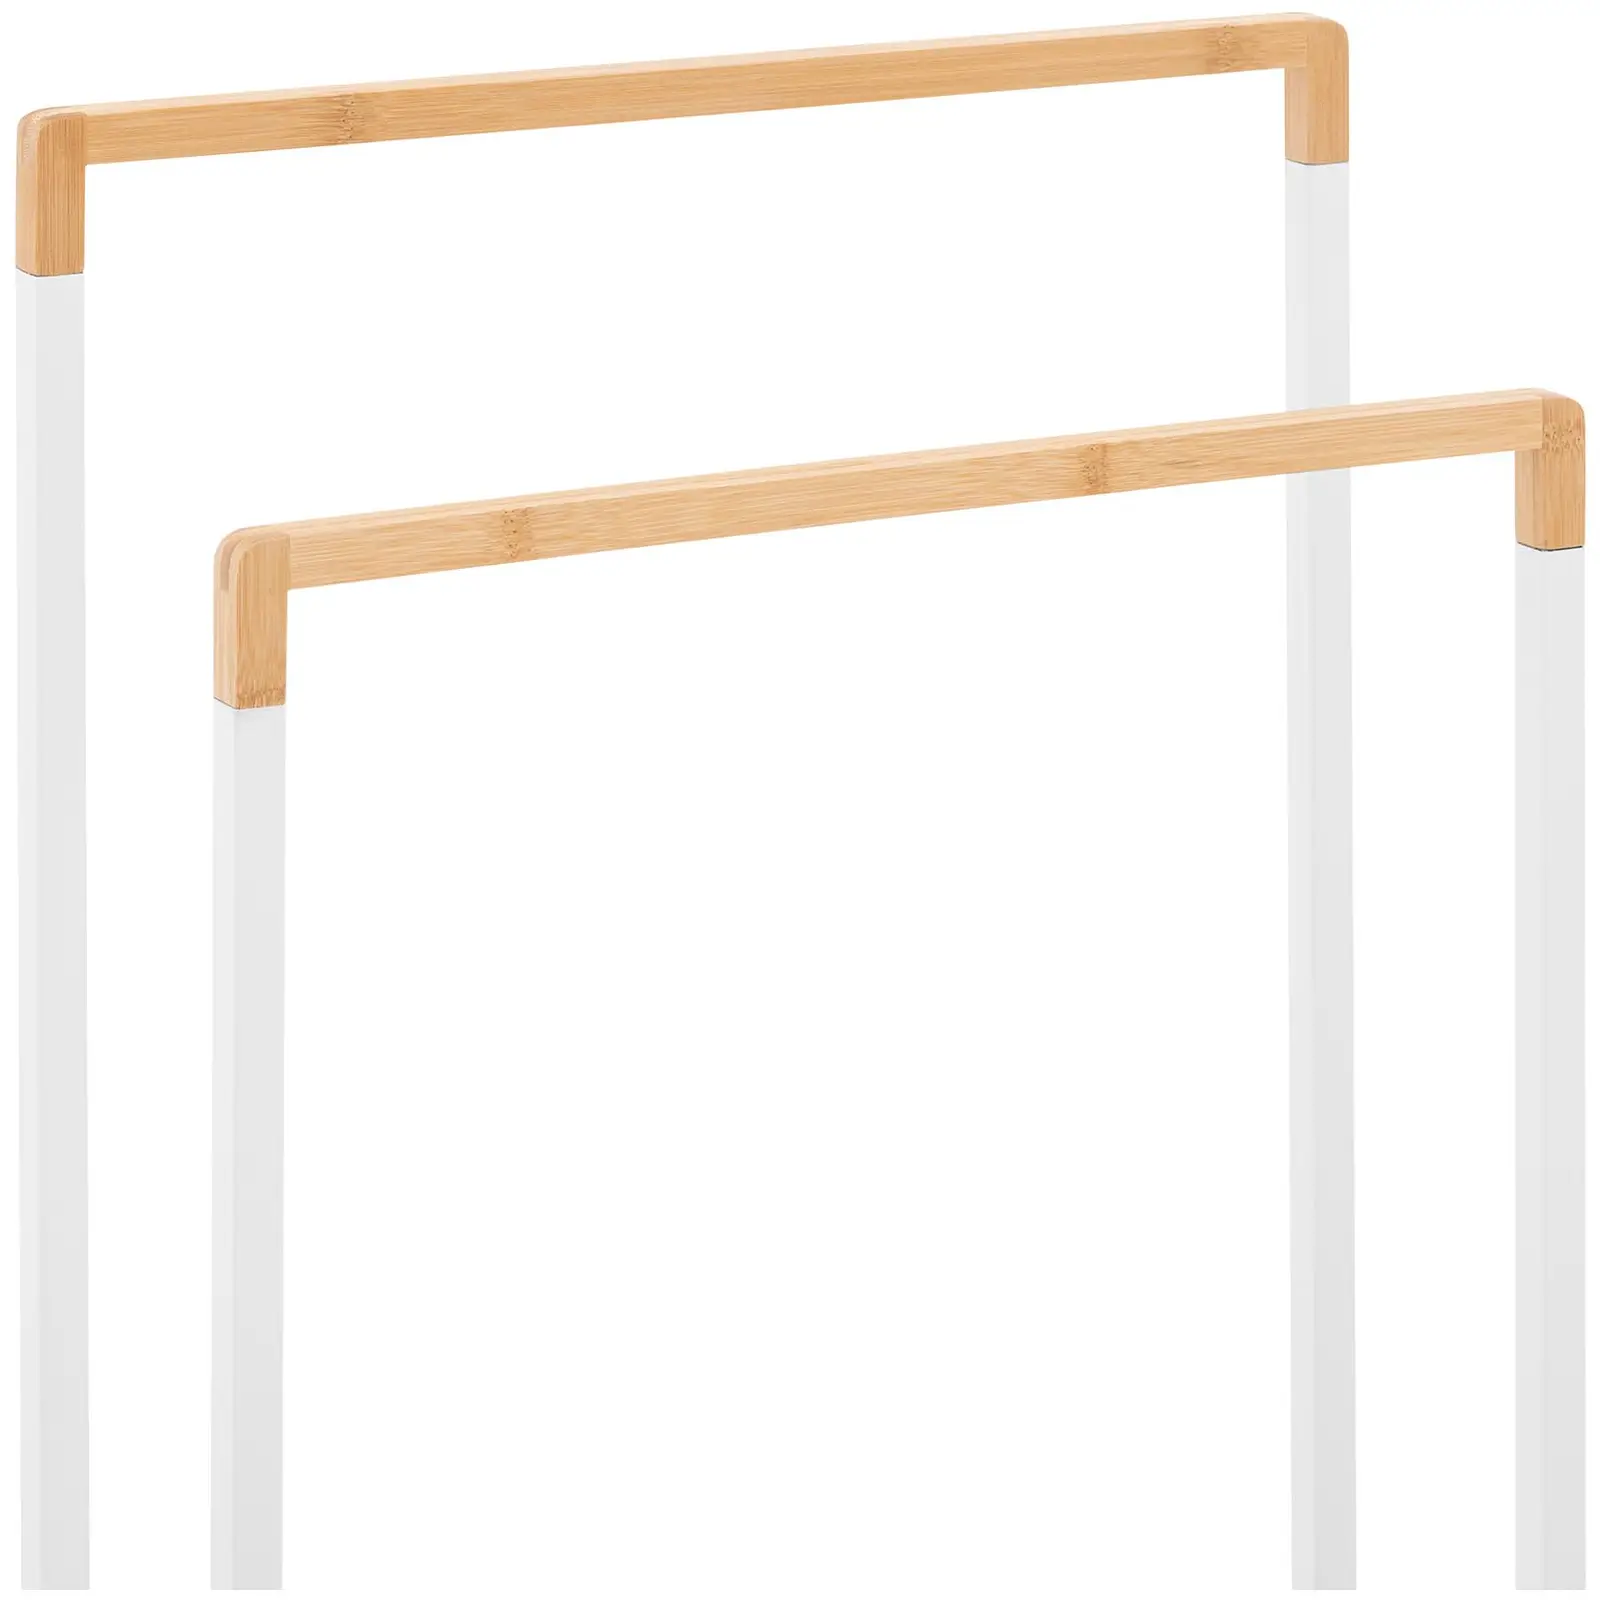 Towel Rail - 2 Bars - Bamboo/White